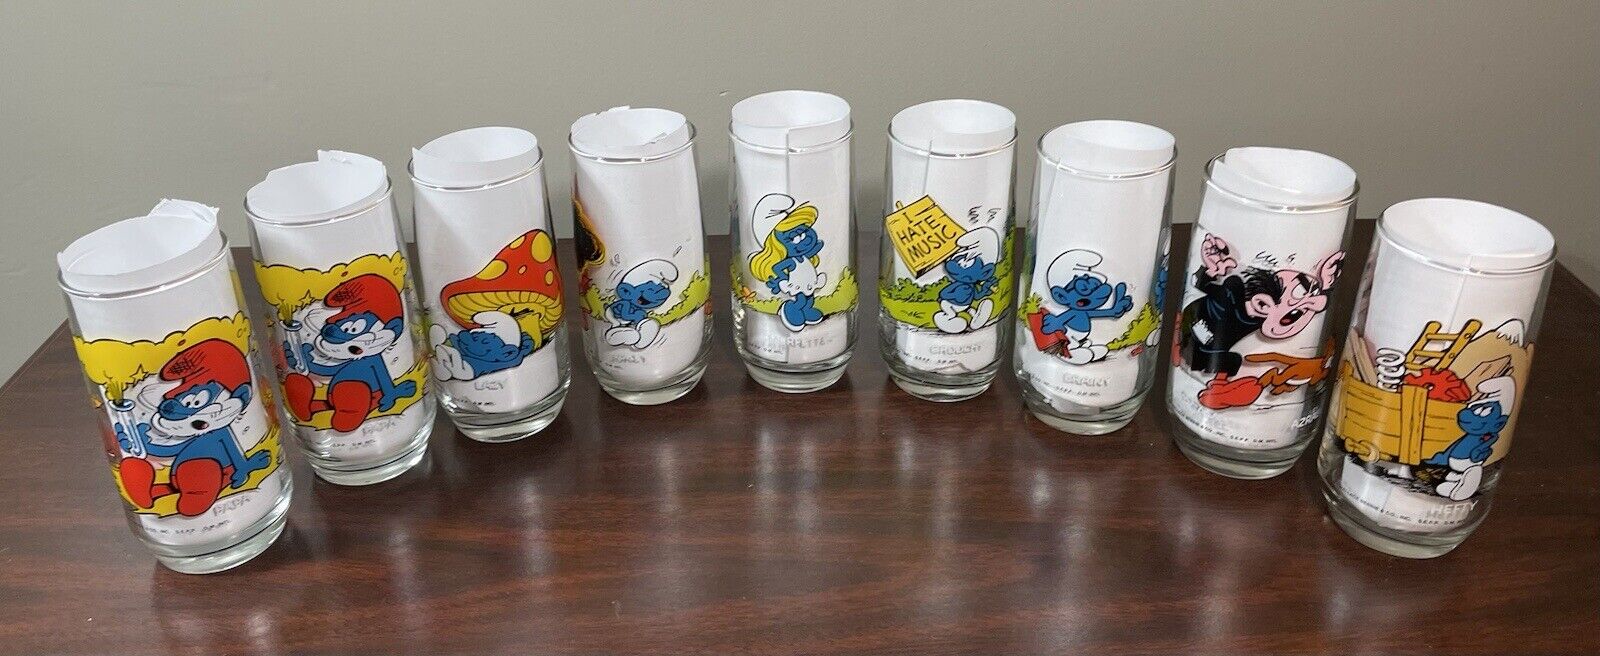 Vintage Lot 1980’s Smurfs Peyo Drinking Glasses COMPLETE Set of 8 plus 1